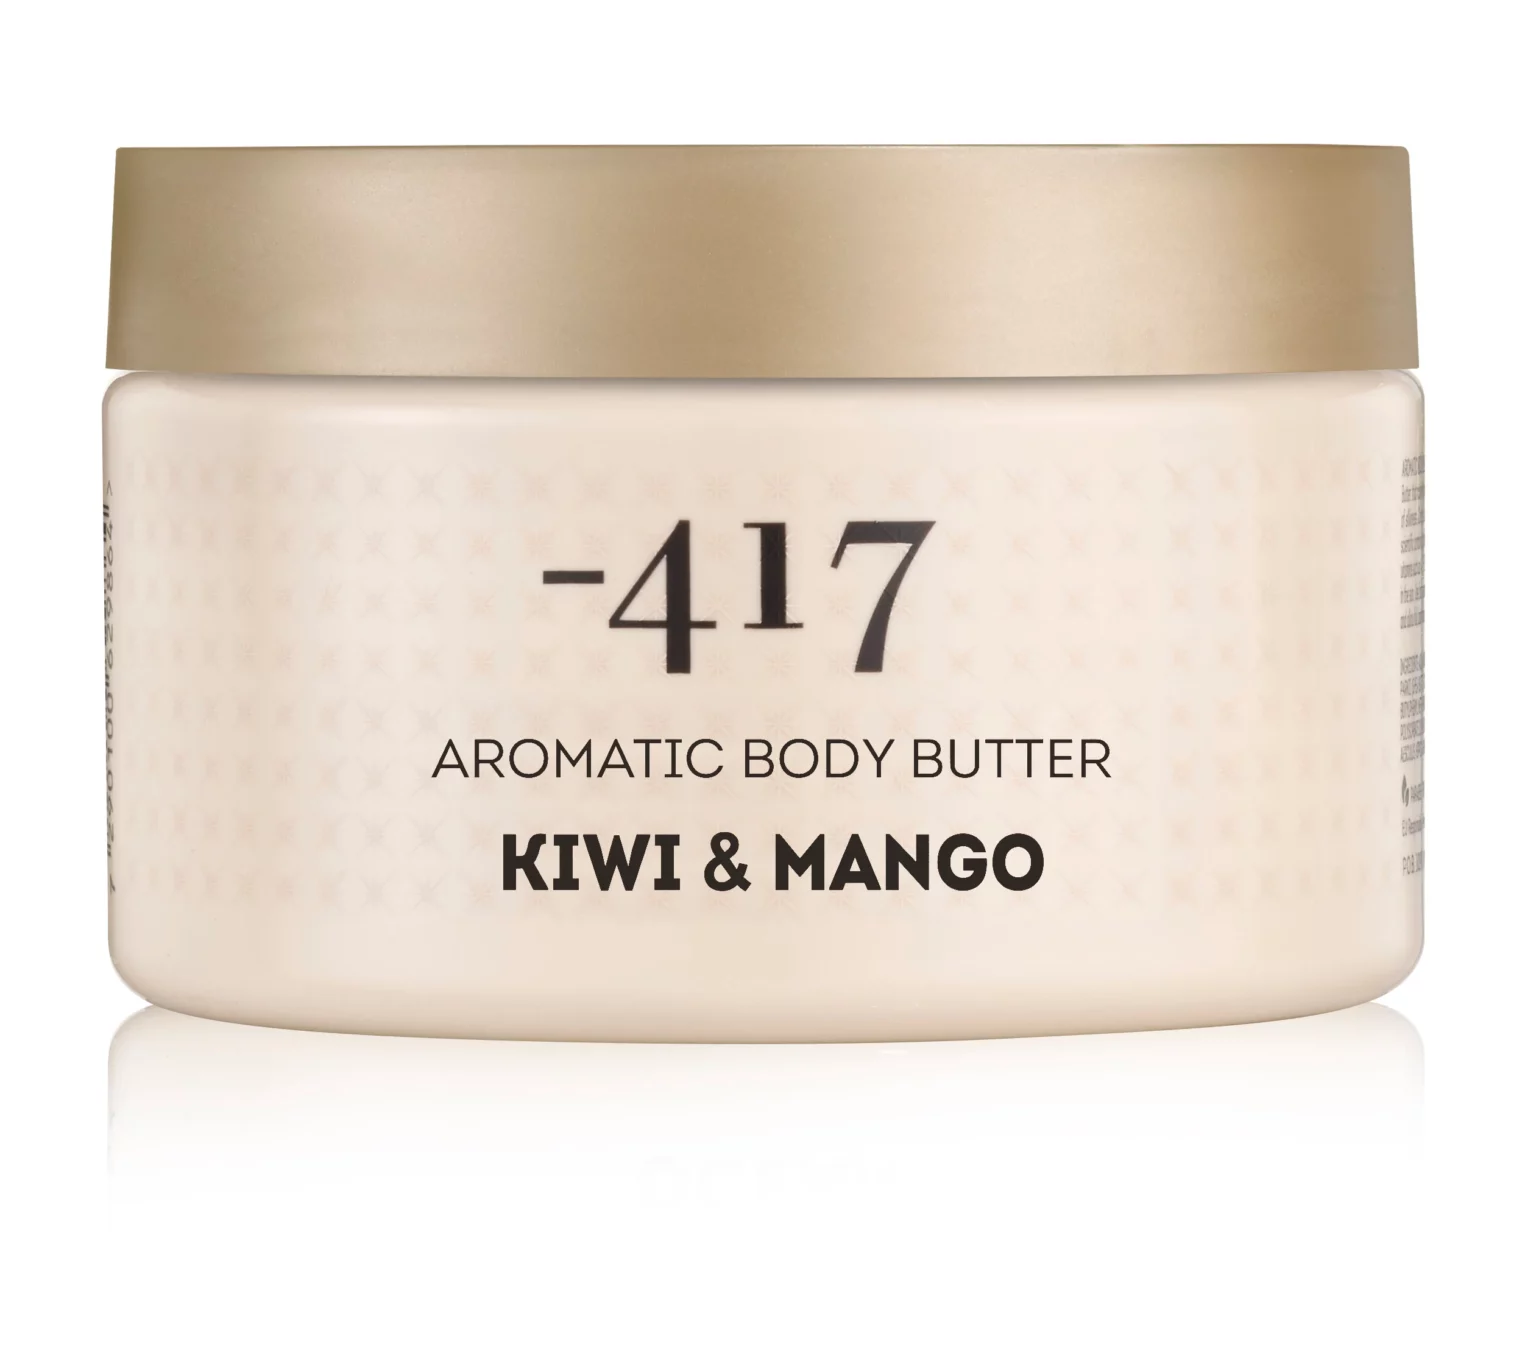 Aromatic Deep Nutrition Body Butter - Kiwi & Mango -417